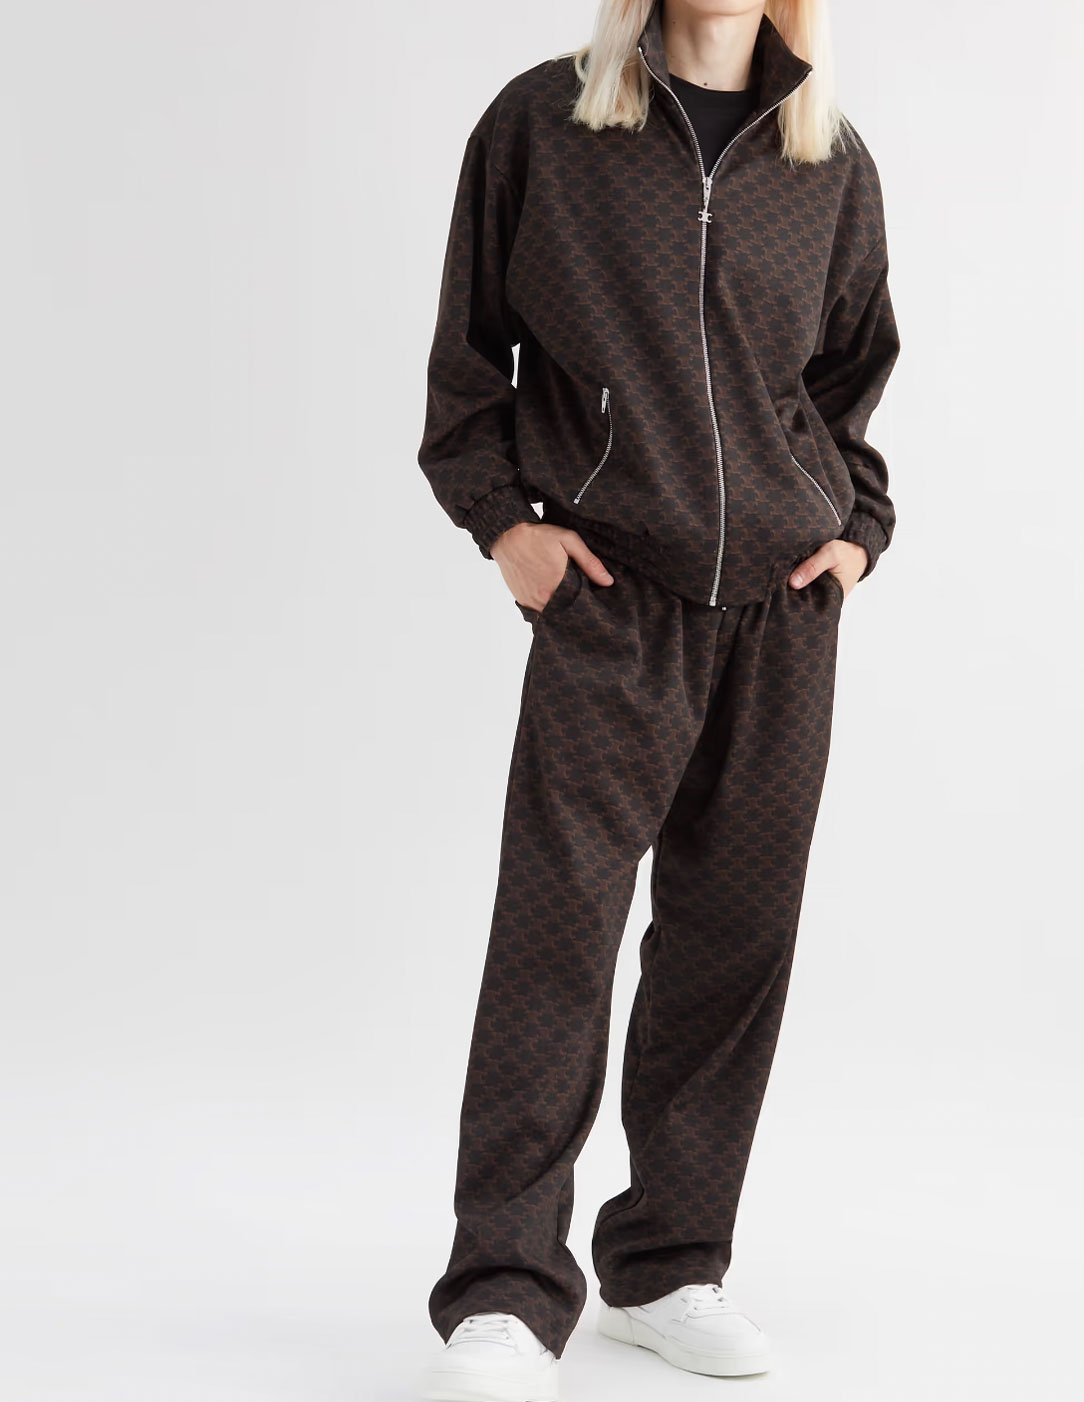 CELINE HOMME Tapered Logo-Print Cotton-Blend Jersey Sweatpants for